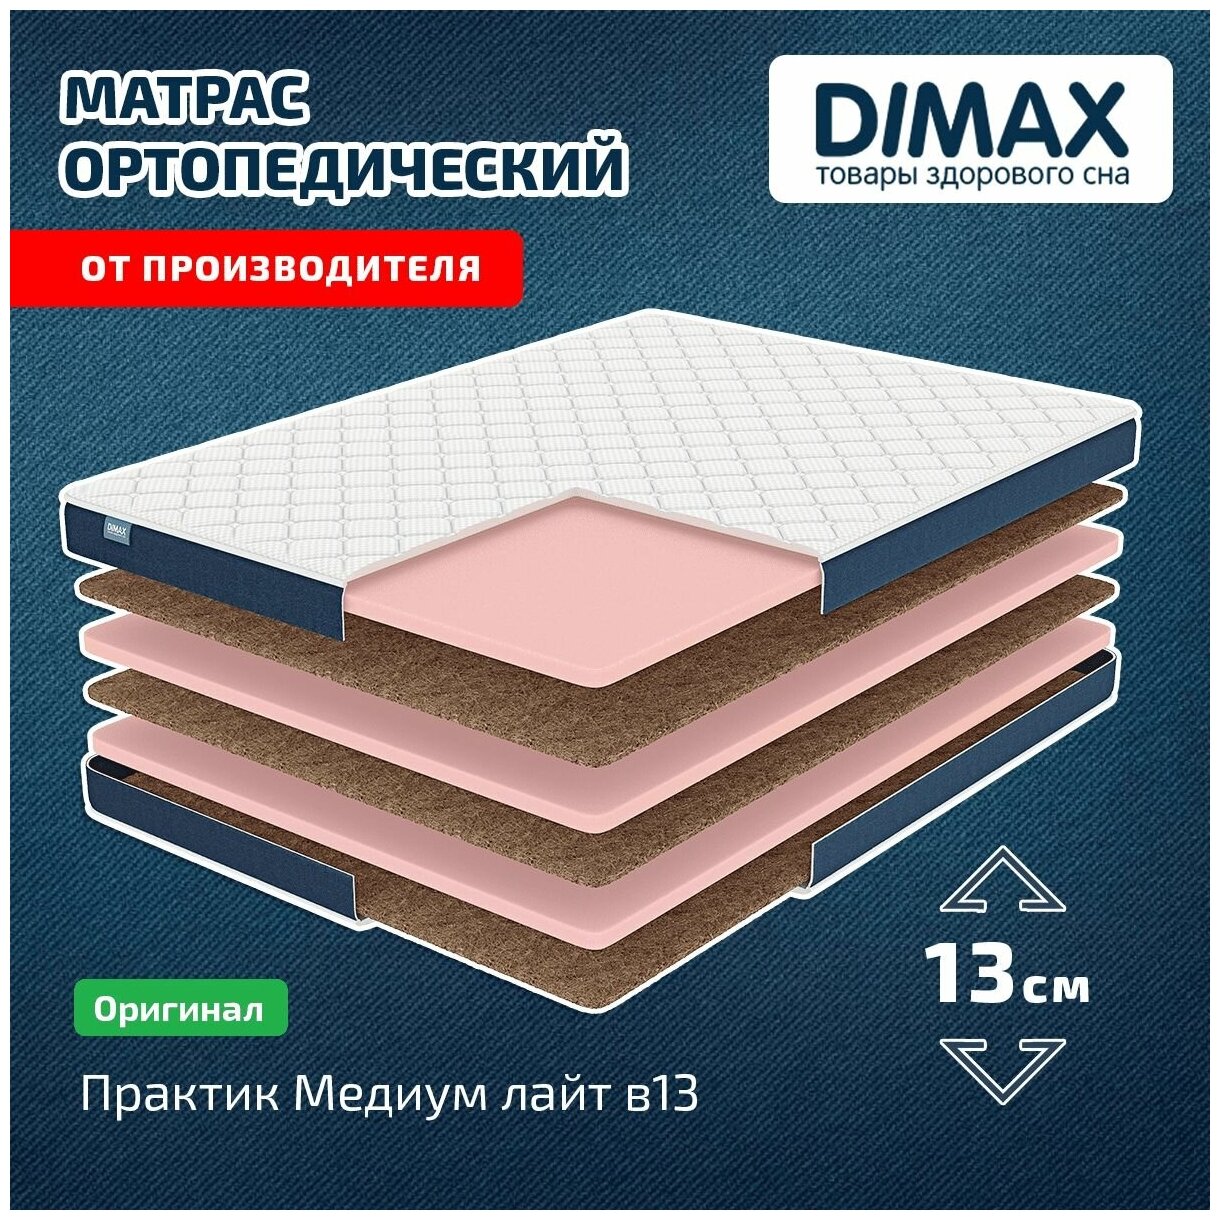 Матрас Dimax Практик Медиум лайт в13 80x200